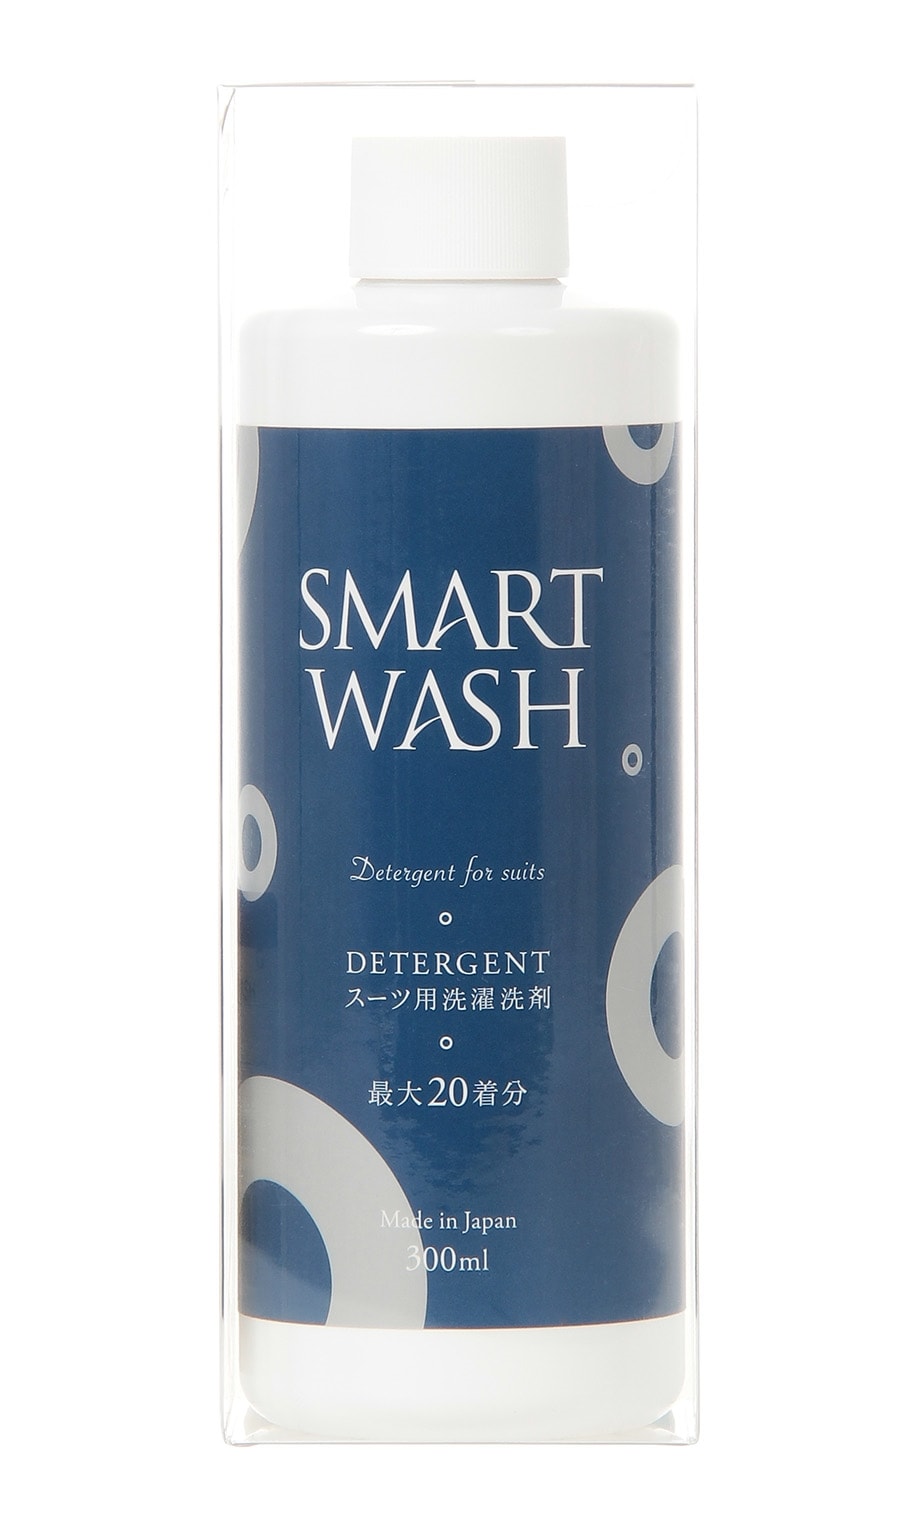 Smart Wash スーツ用洗剤 Smartwash900 紳士服 スーツ販売数世界no 1 洋服の青山 公式通販